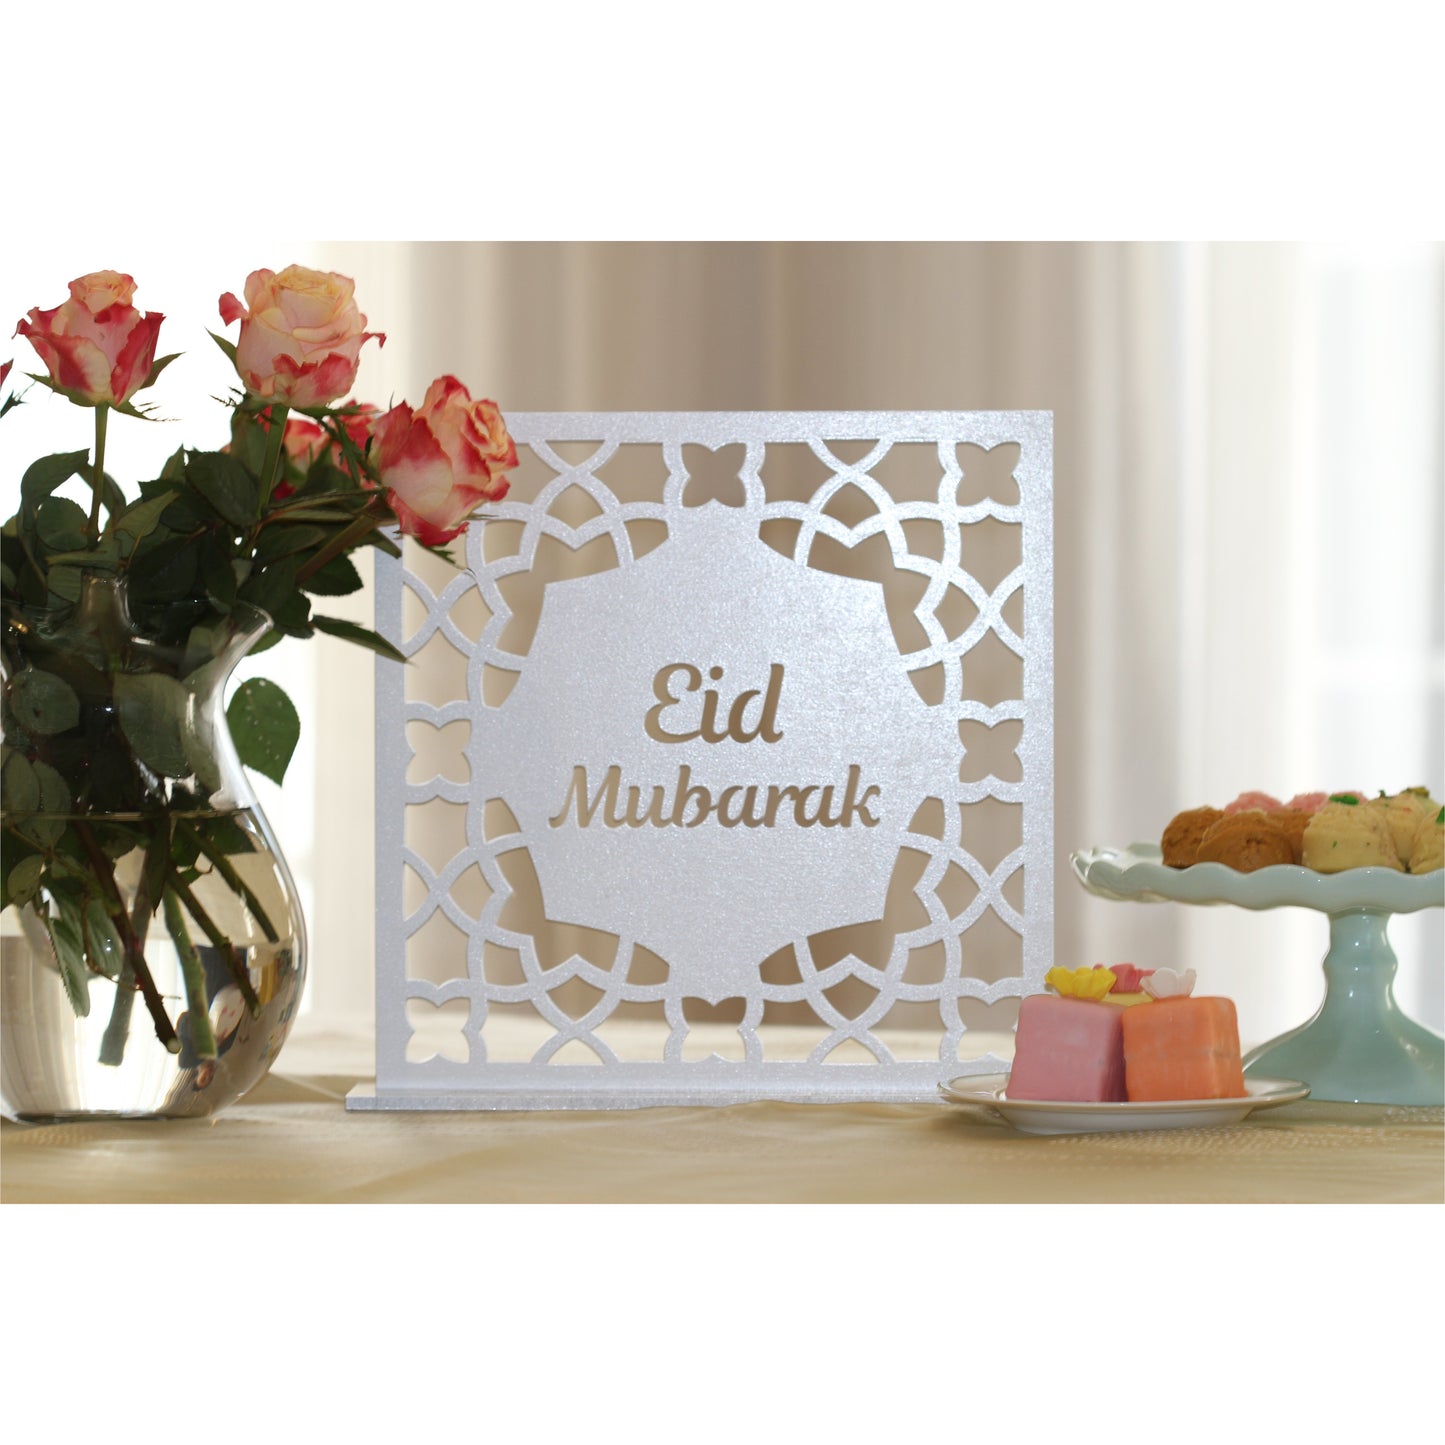 Eid Mubarak Wooden Table Stand (Gold / White / Black)